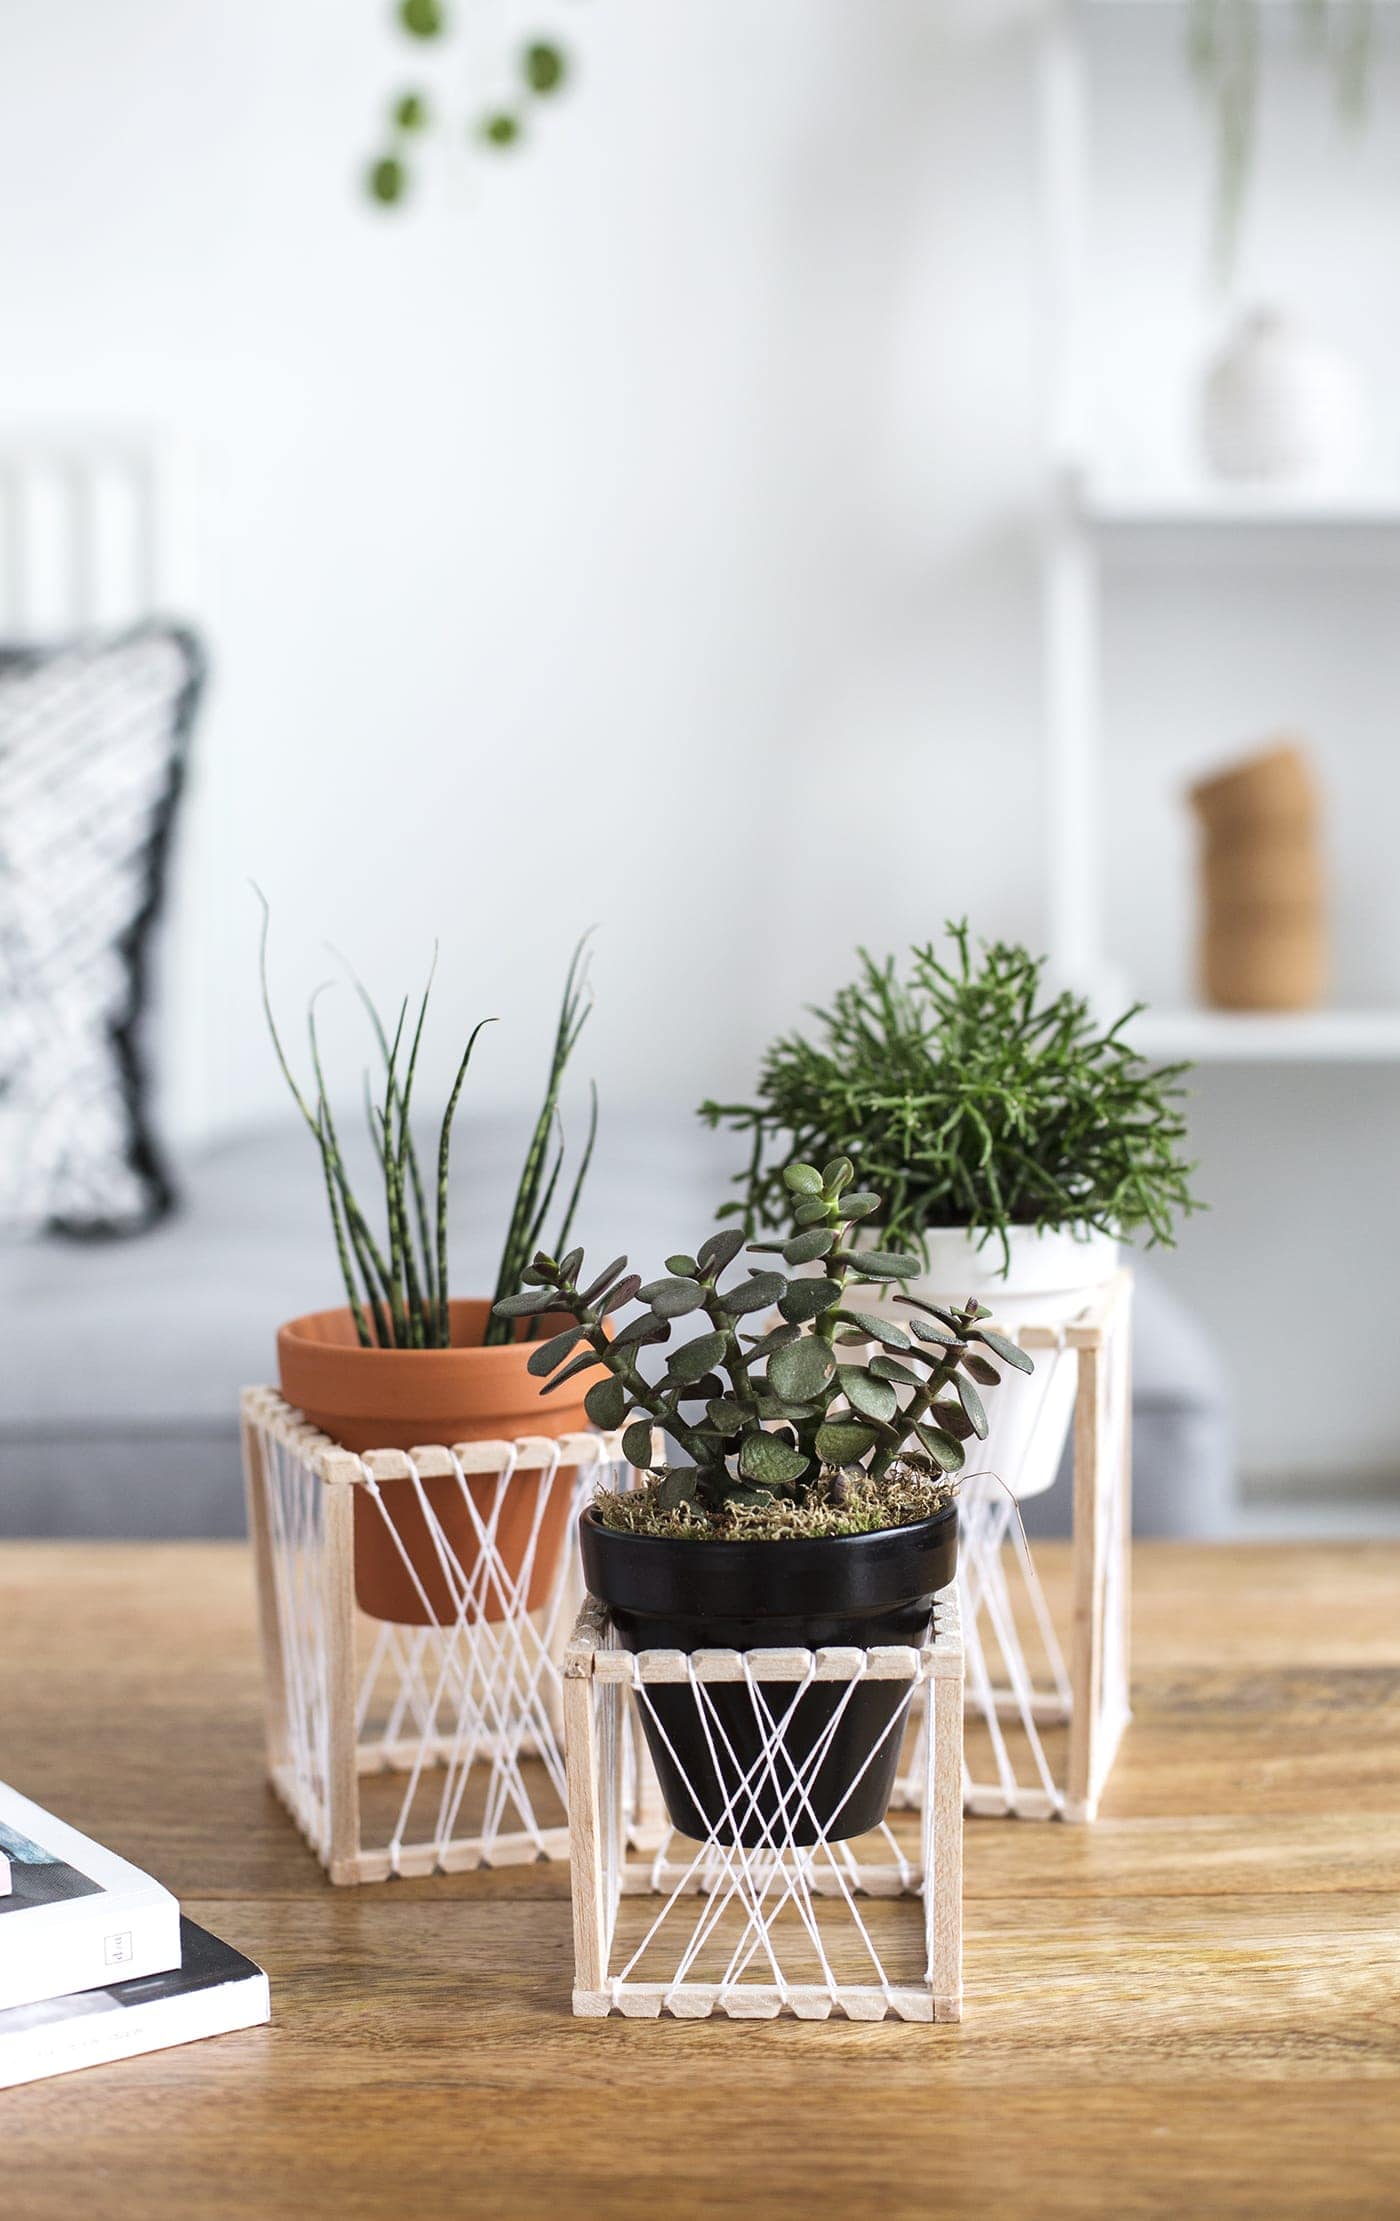 DIY-decorative-plant-stands